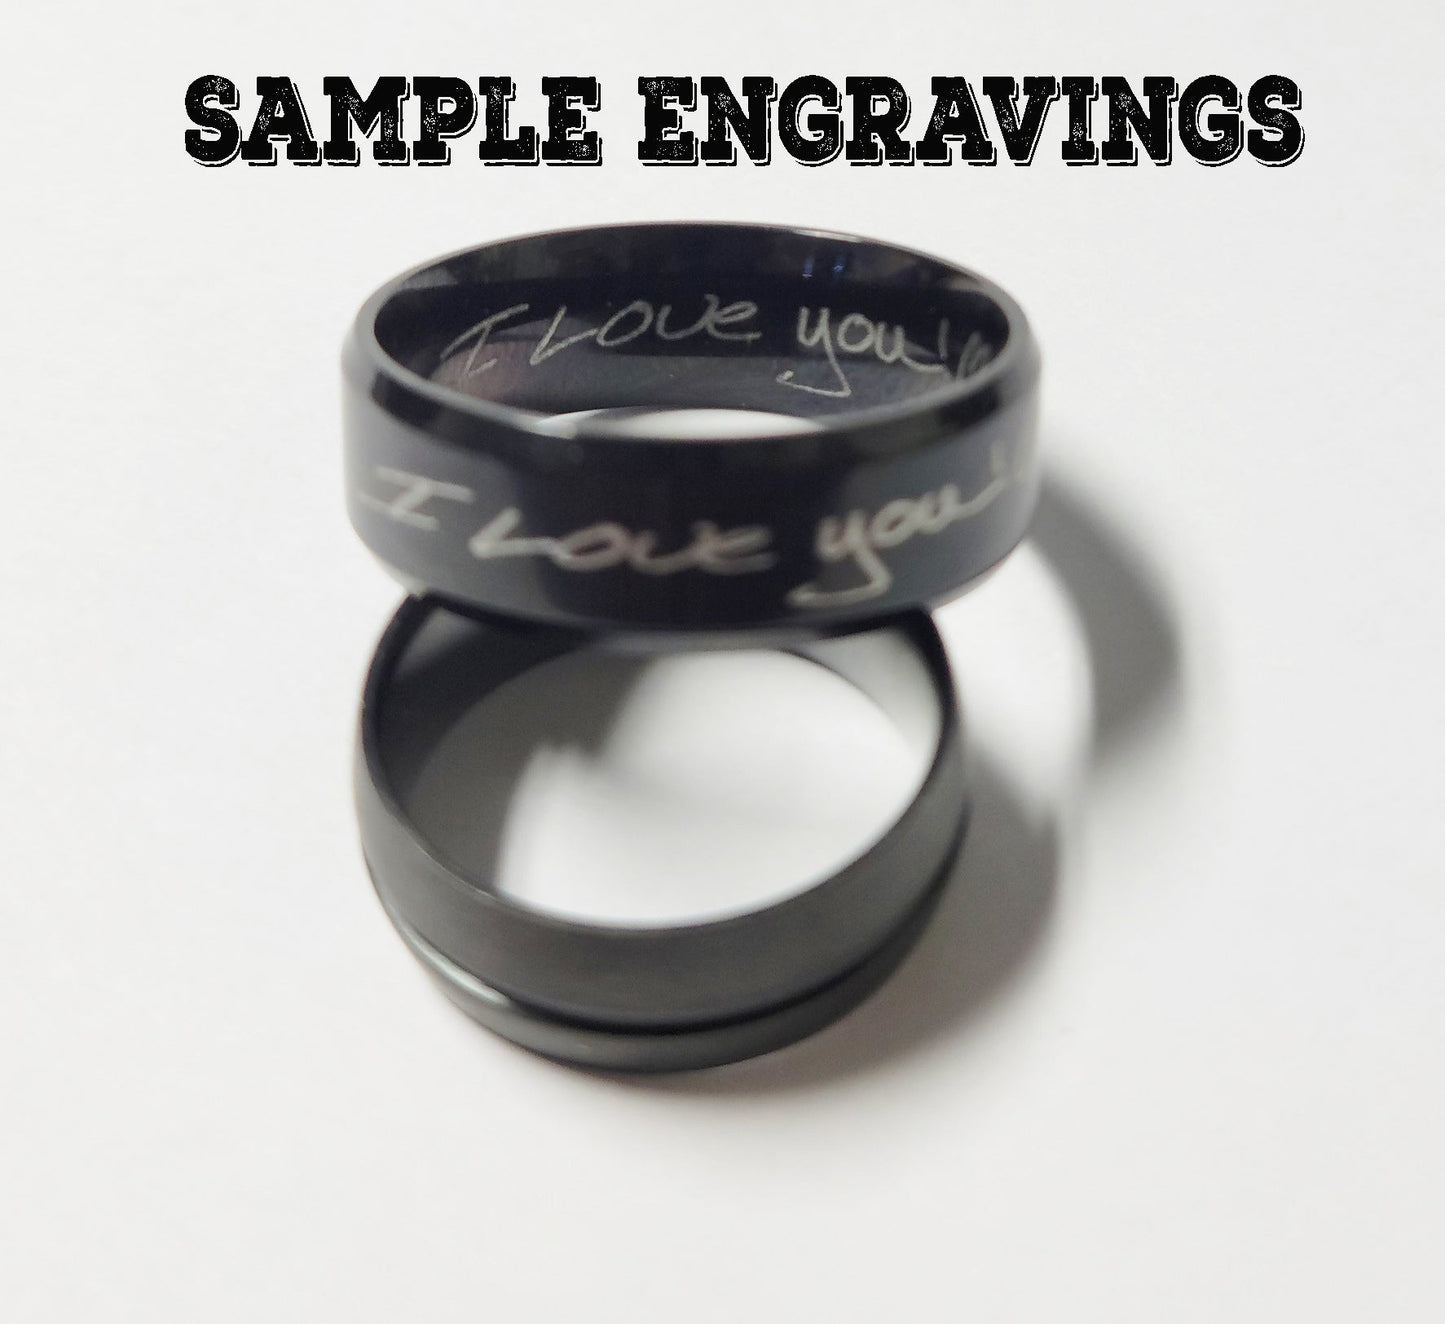 Think Engraved wedding Band Custom Engraved Man's Blue Wedding Ring - Personalized wedding Ring For Guys